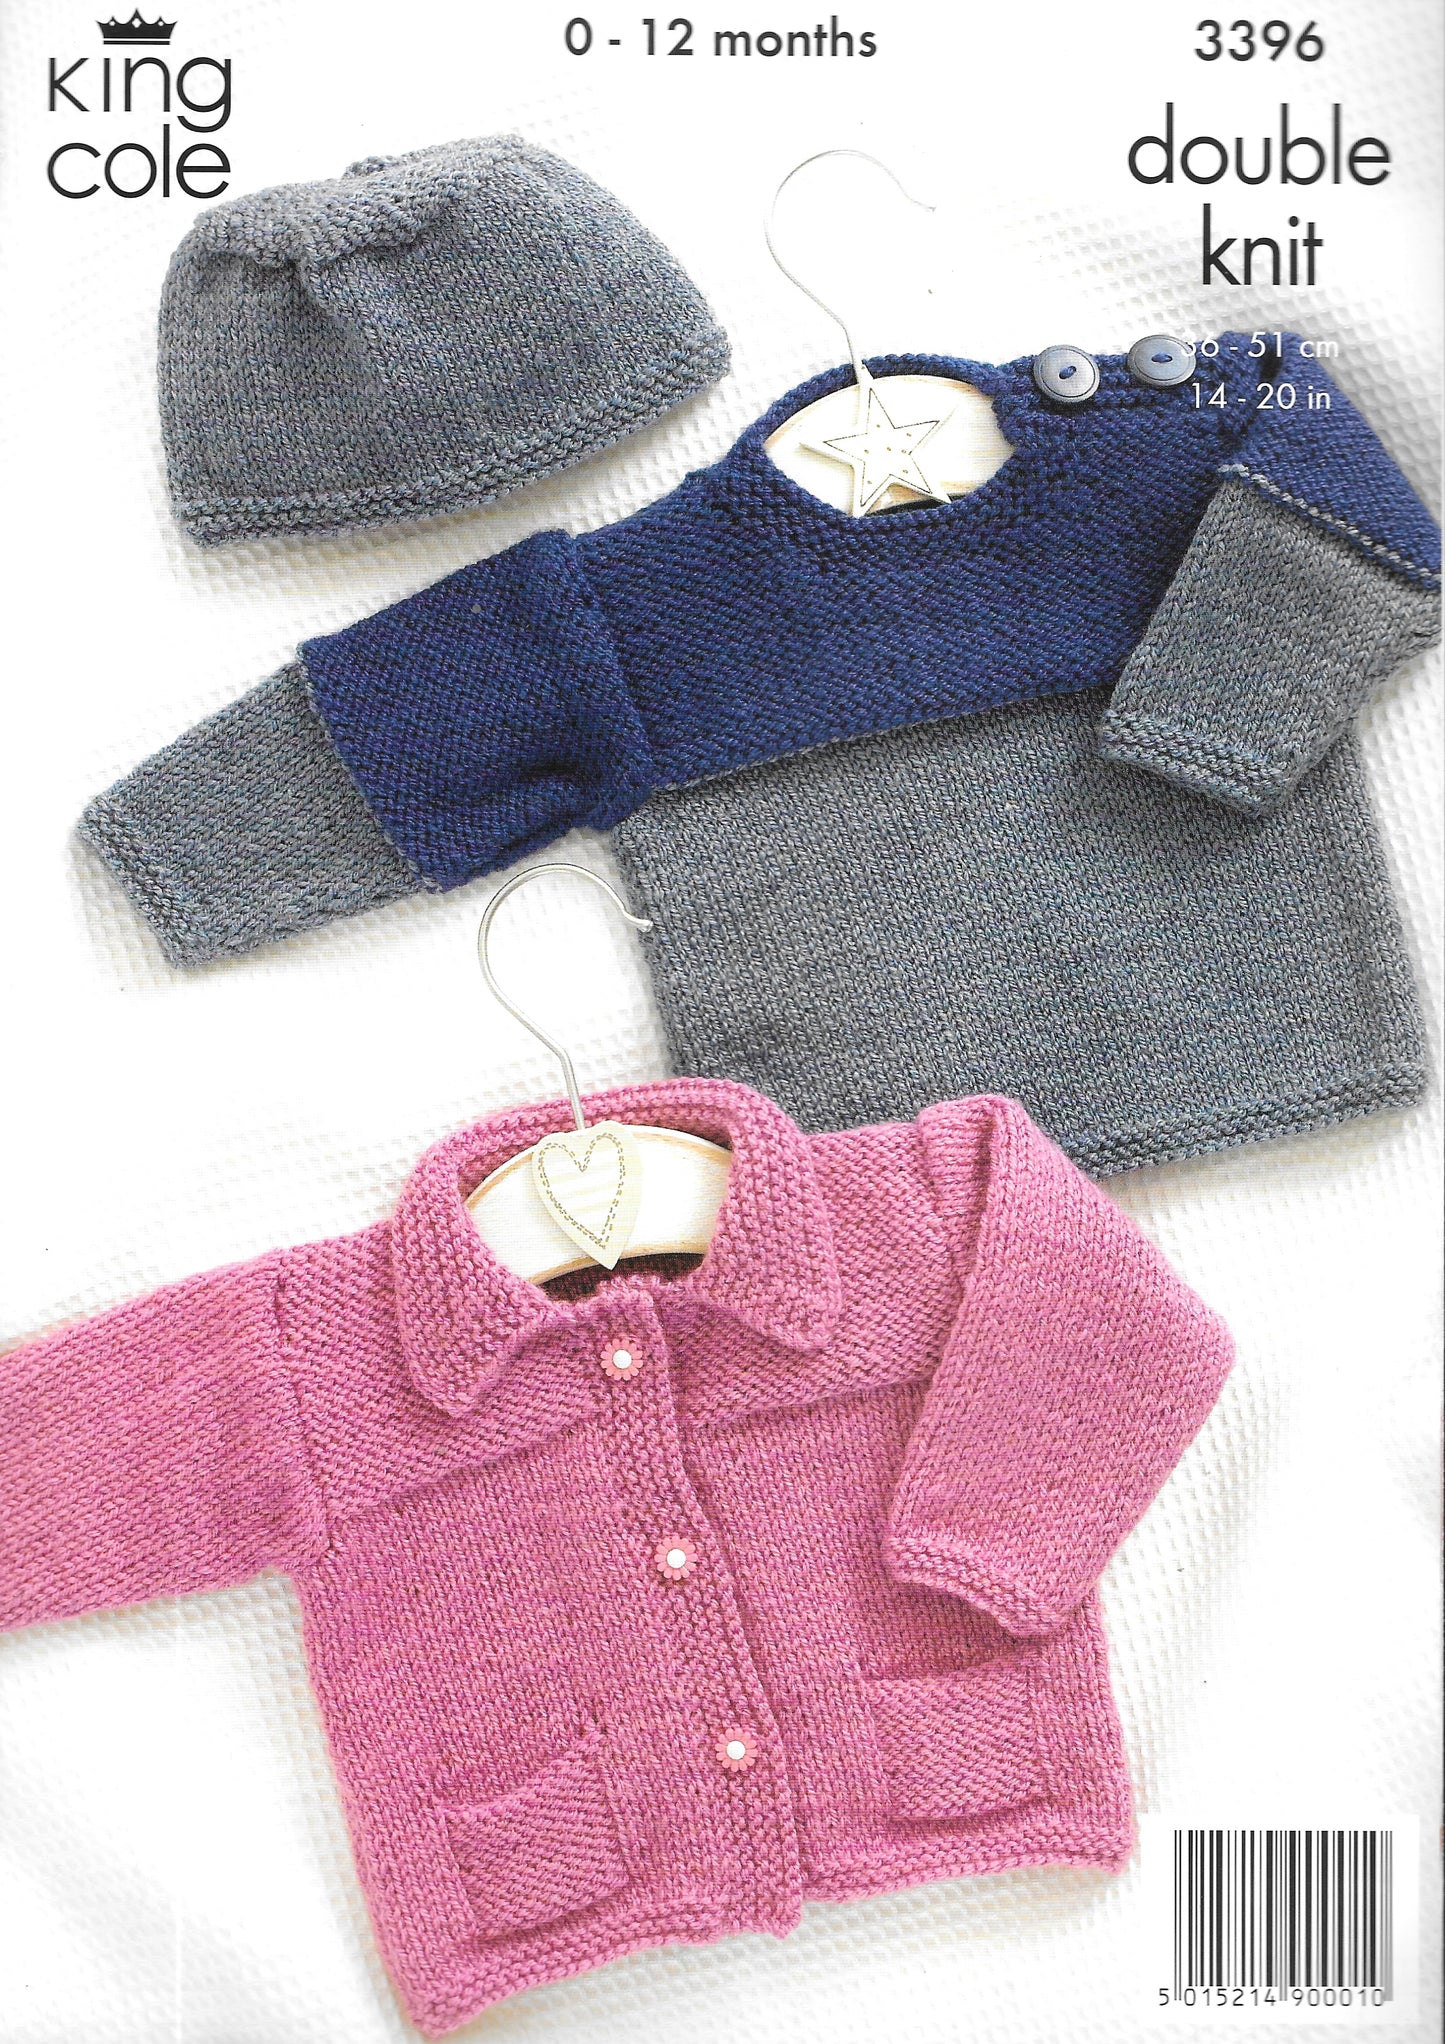 3396 King Cole Knitting Pattern. Jacket/Sweater/Hat. Double Knit